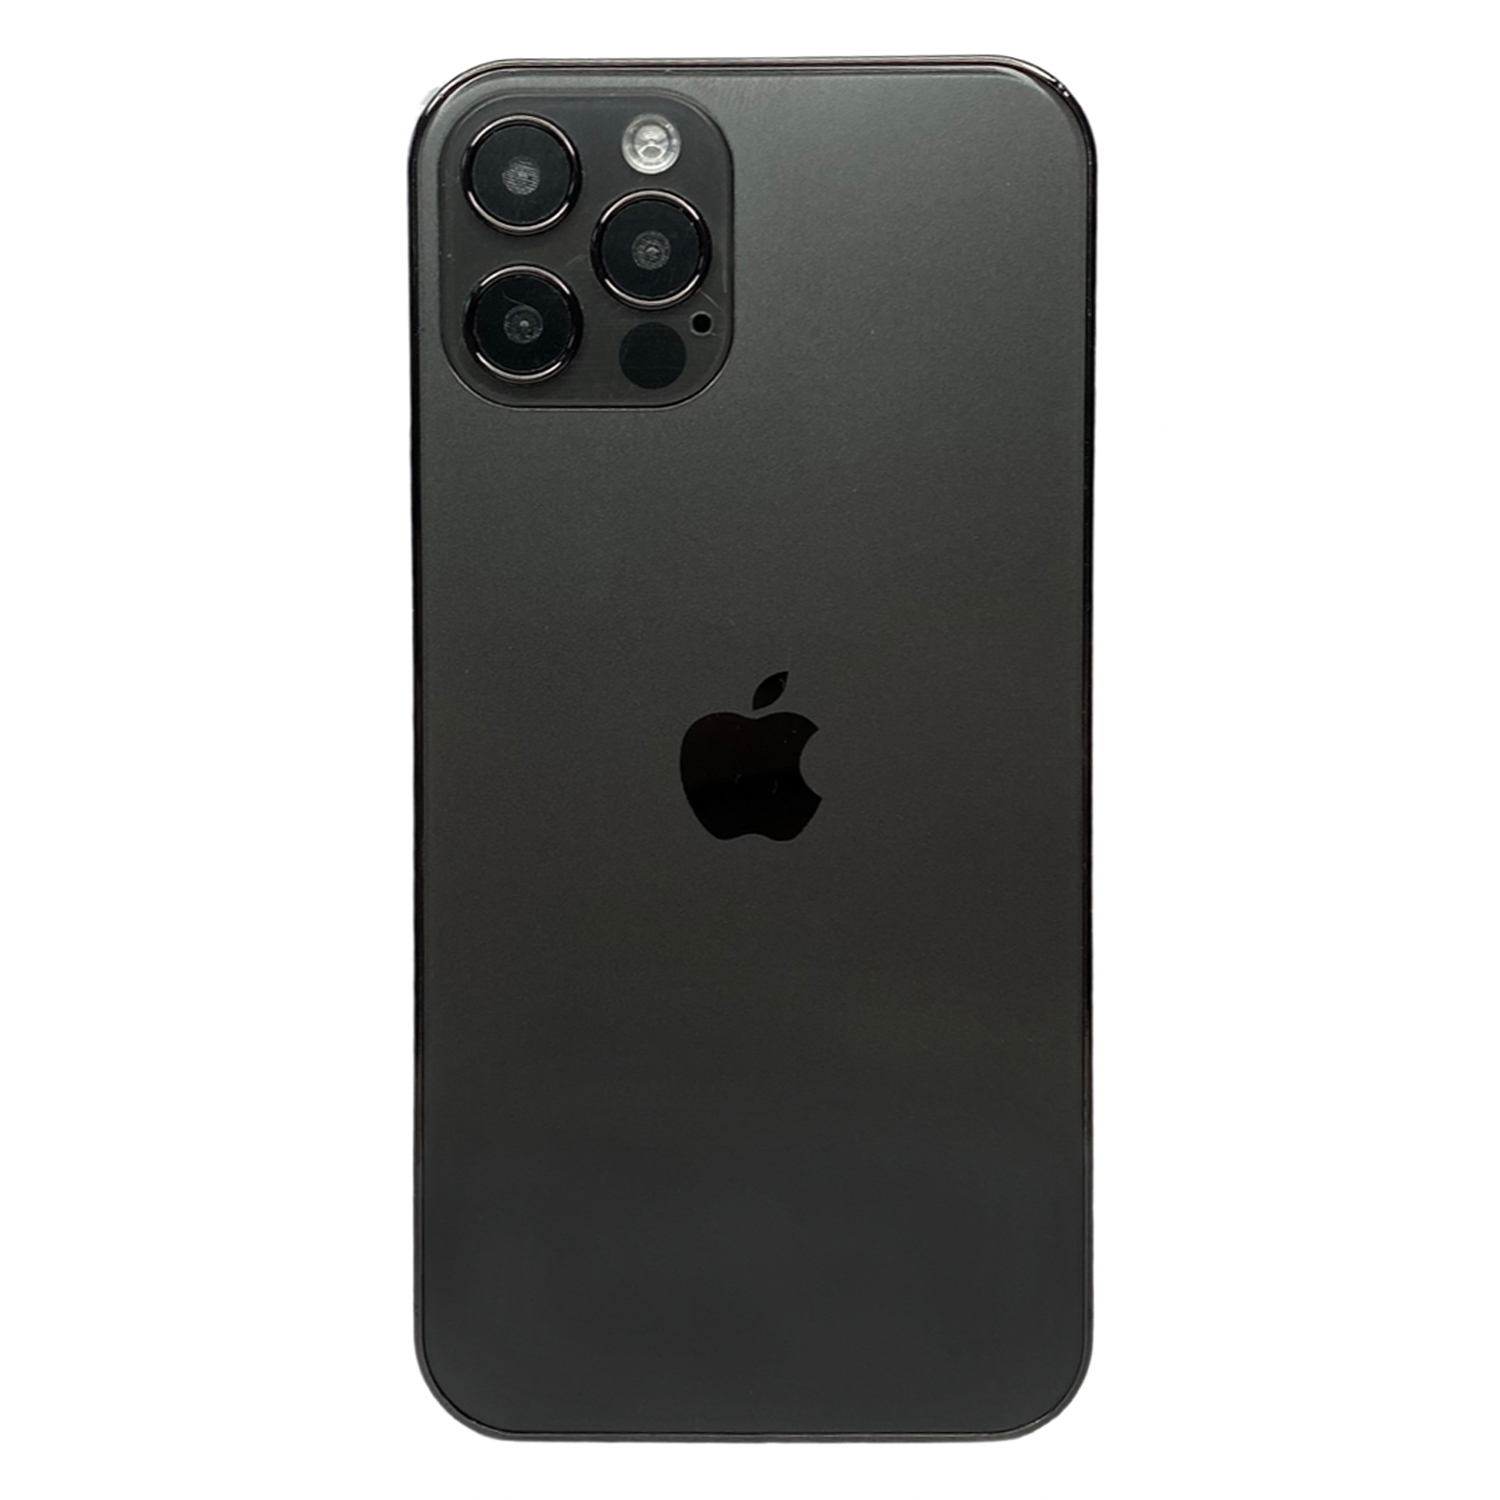 Apple iphone 13 pro max 256gb. Iphone 12 Pro Max 256gb Graphite. Iphone 13 Pro Max Graphite. Apple iphone 12 Pro Max 256gb графитовый. Apple iphone 12 Pro Max 128gb.